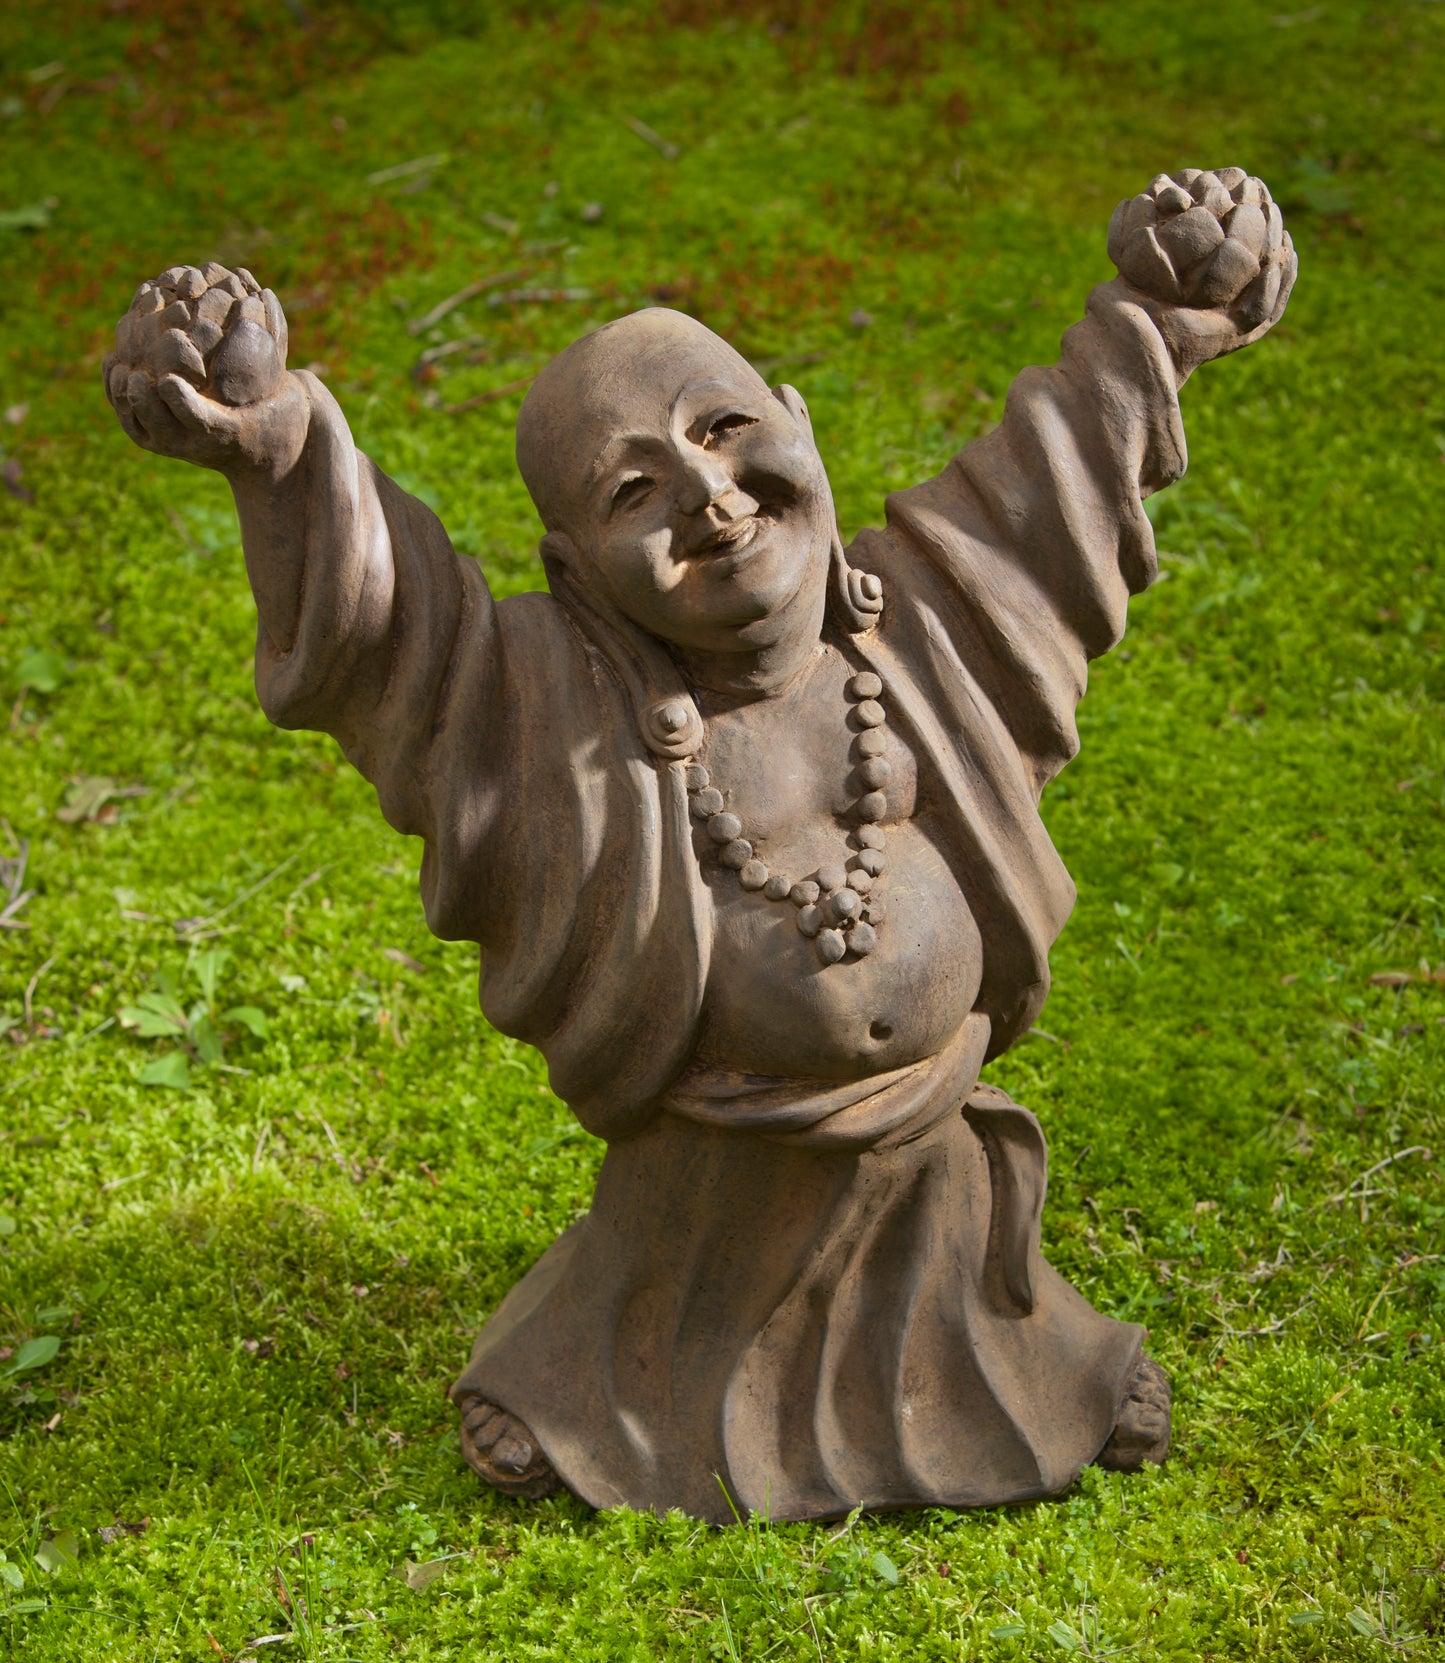 Budai with Lotus Flowers Garden Statue